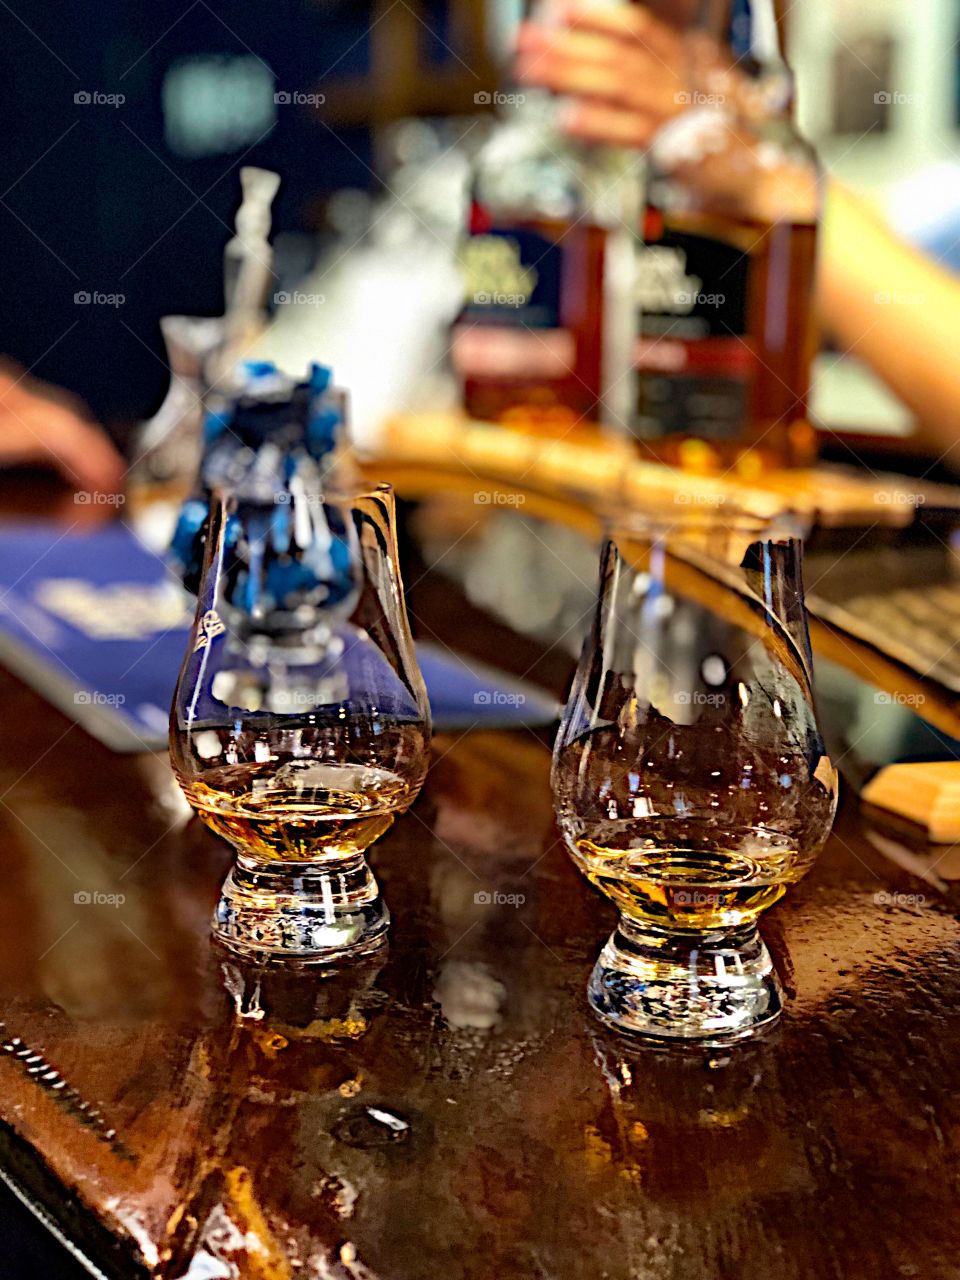 Taste test by Glen Moray in whiskey glasses! 